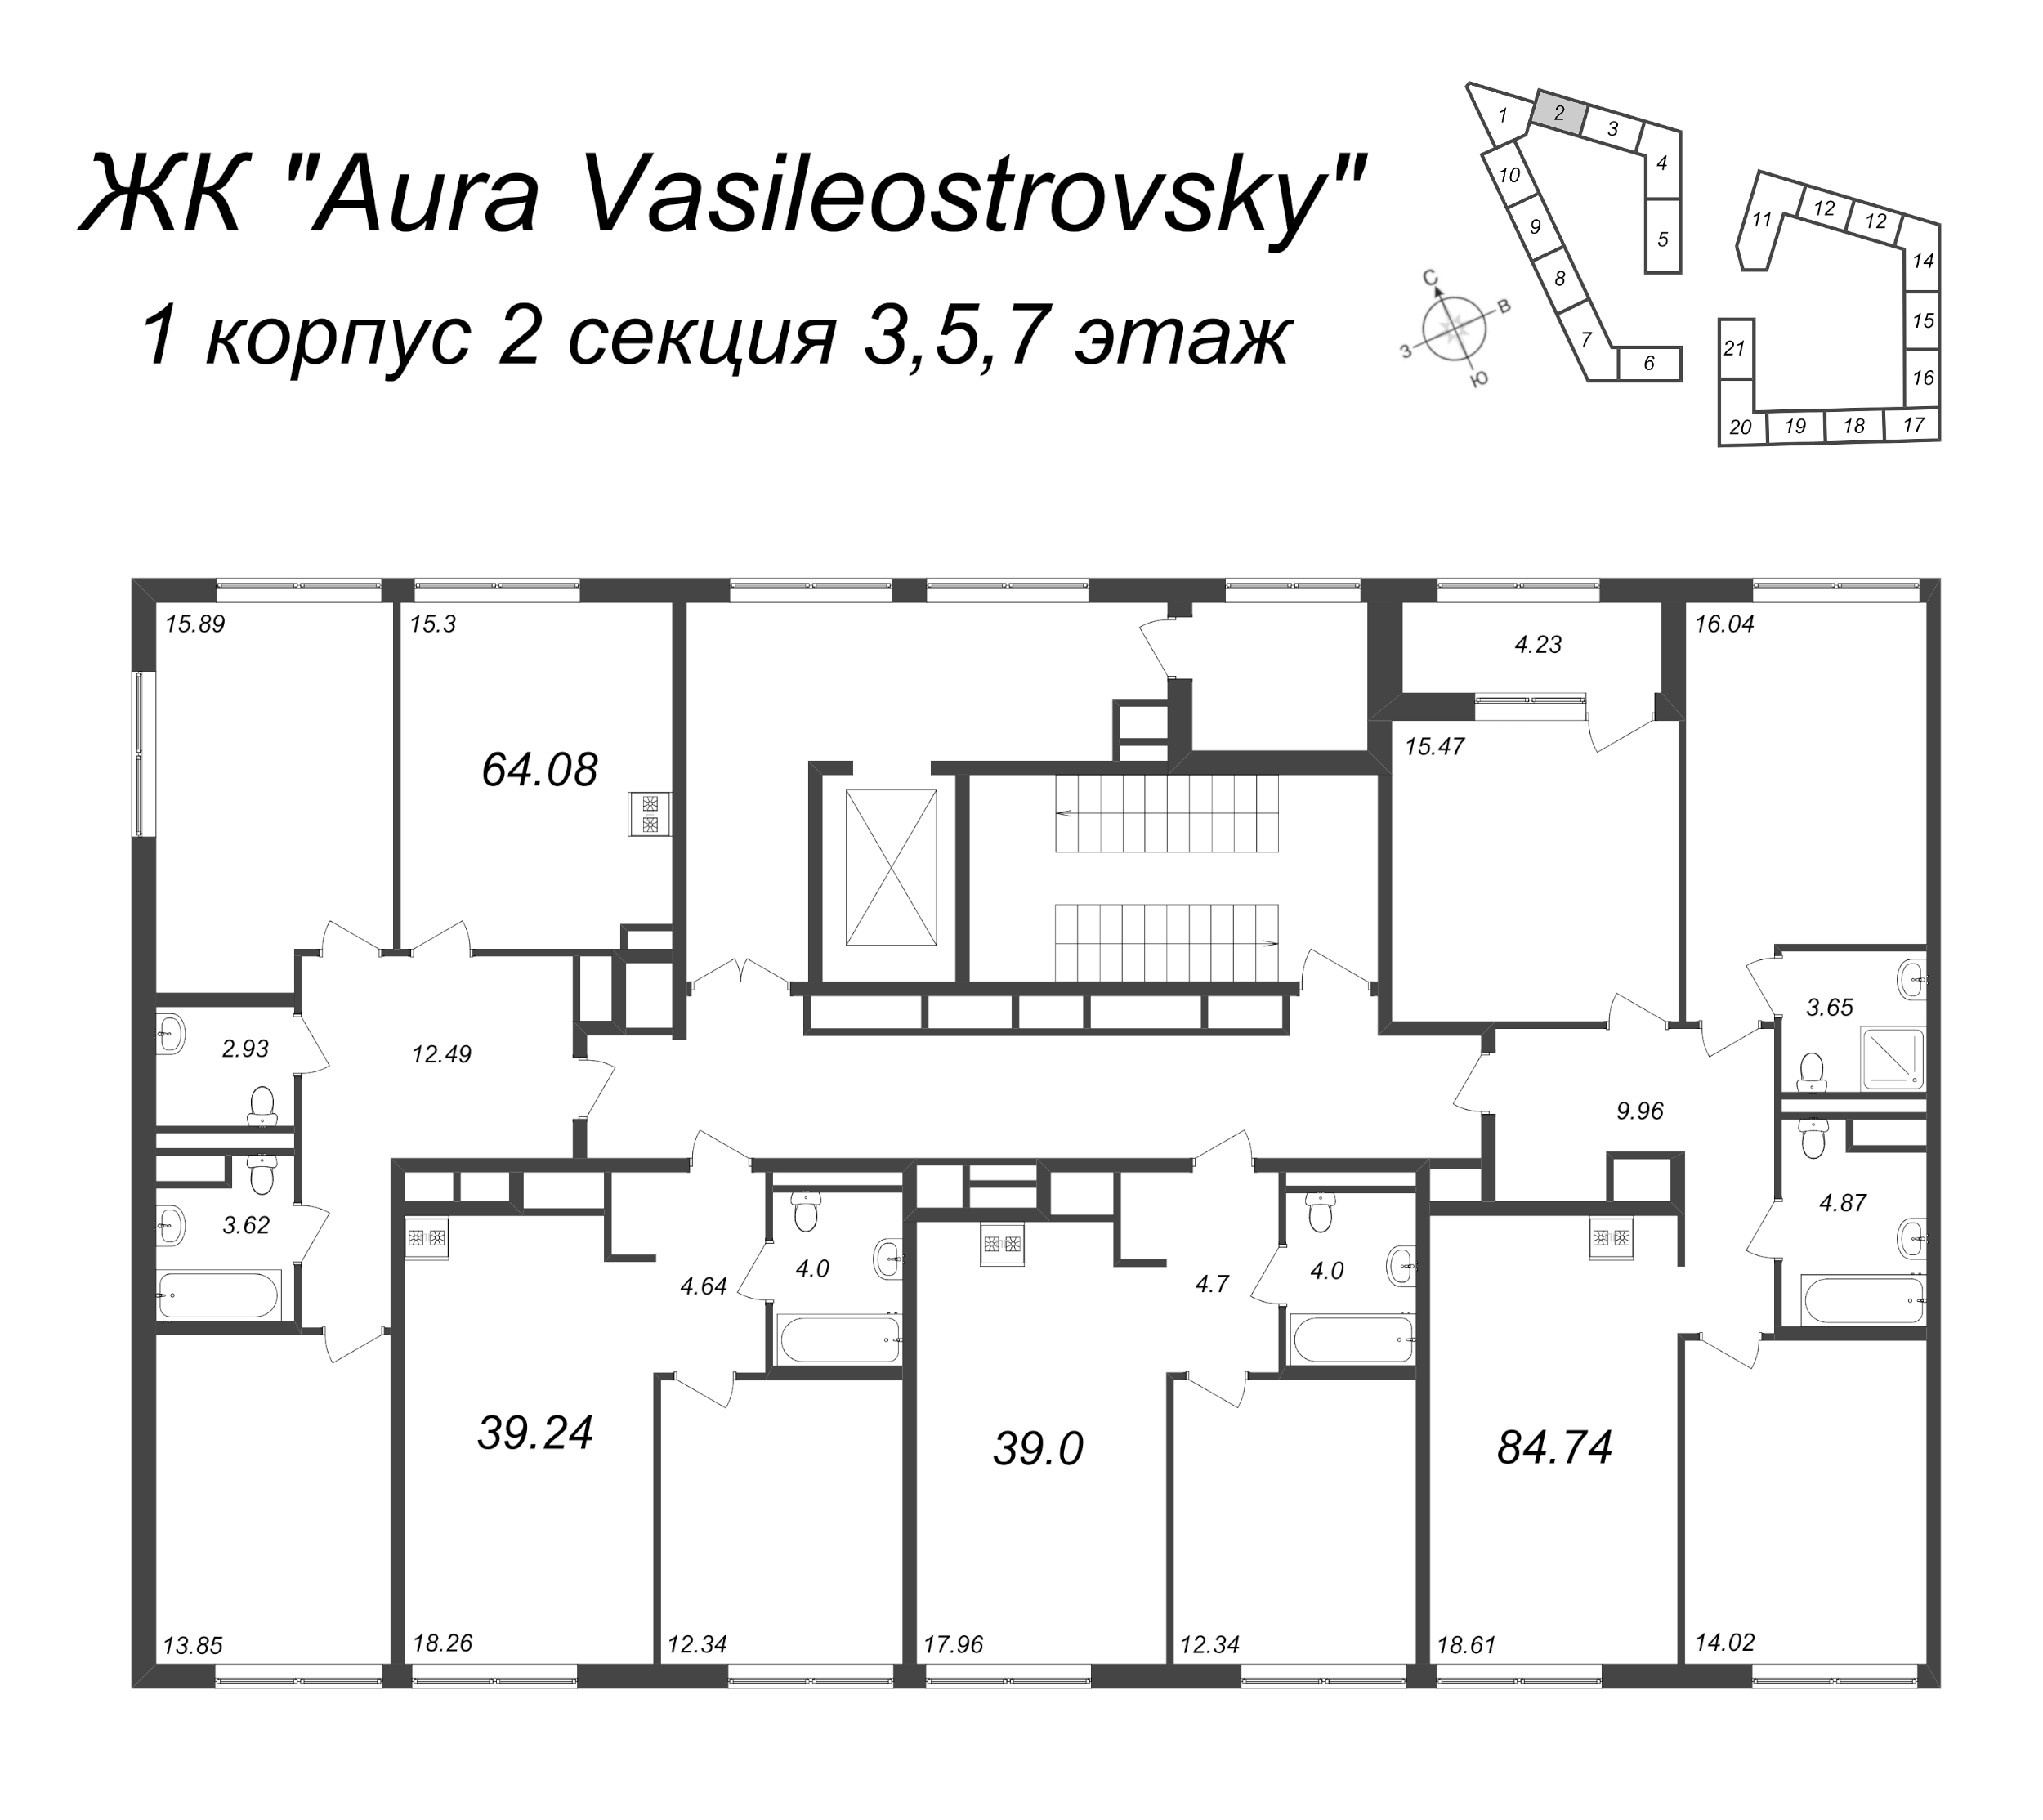 2-комнатная (Евро) квартира, 39.24 м² - планировка этажа